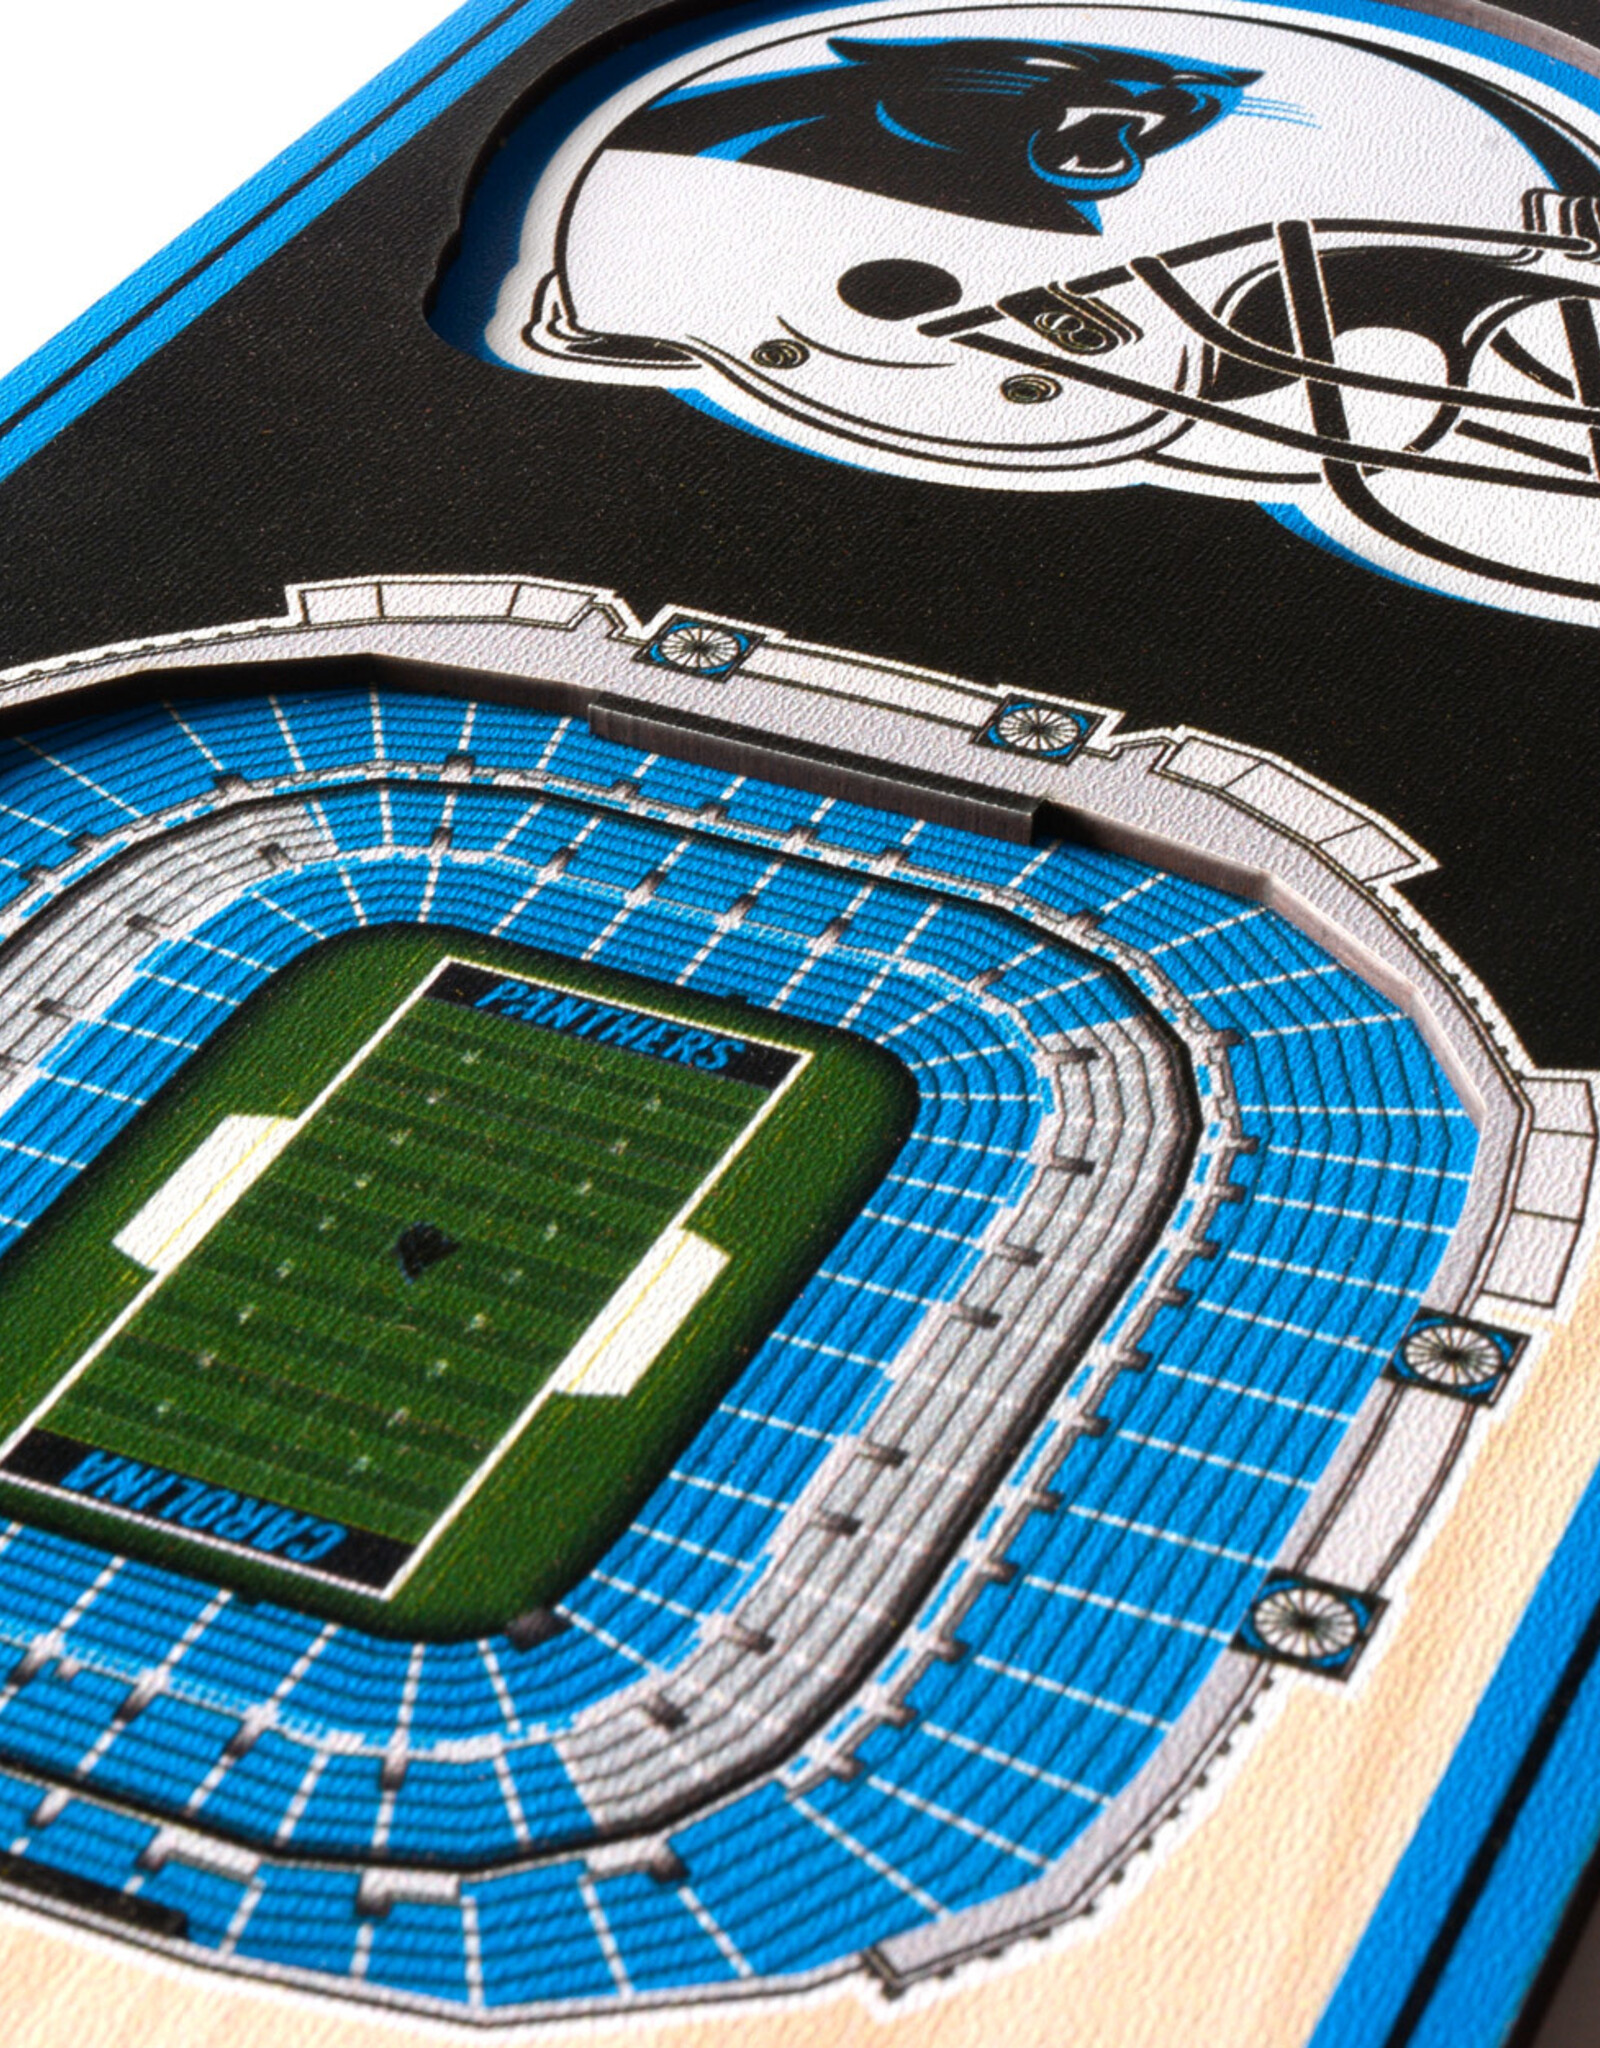 YOU THE FAN Carolina Panthers 3D StadiumView 6x19 Banner